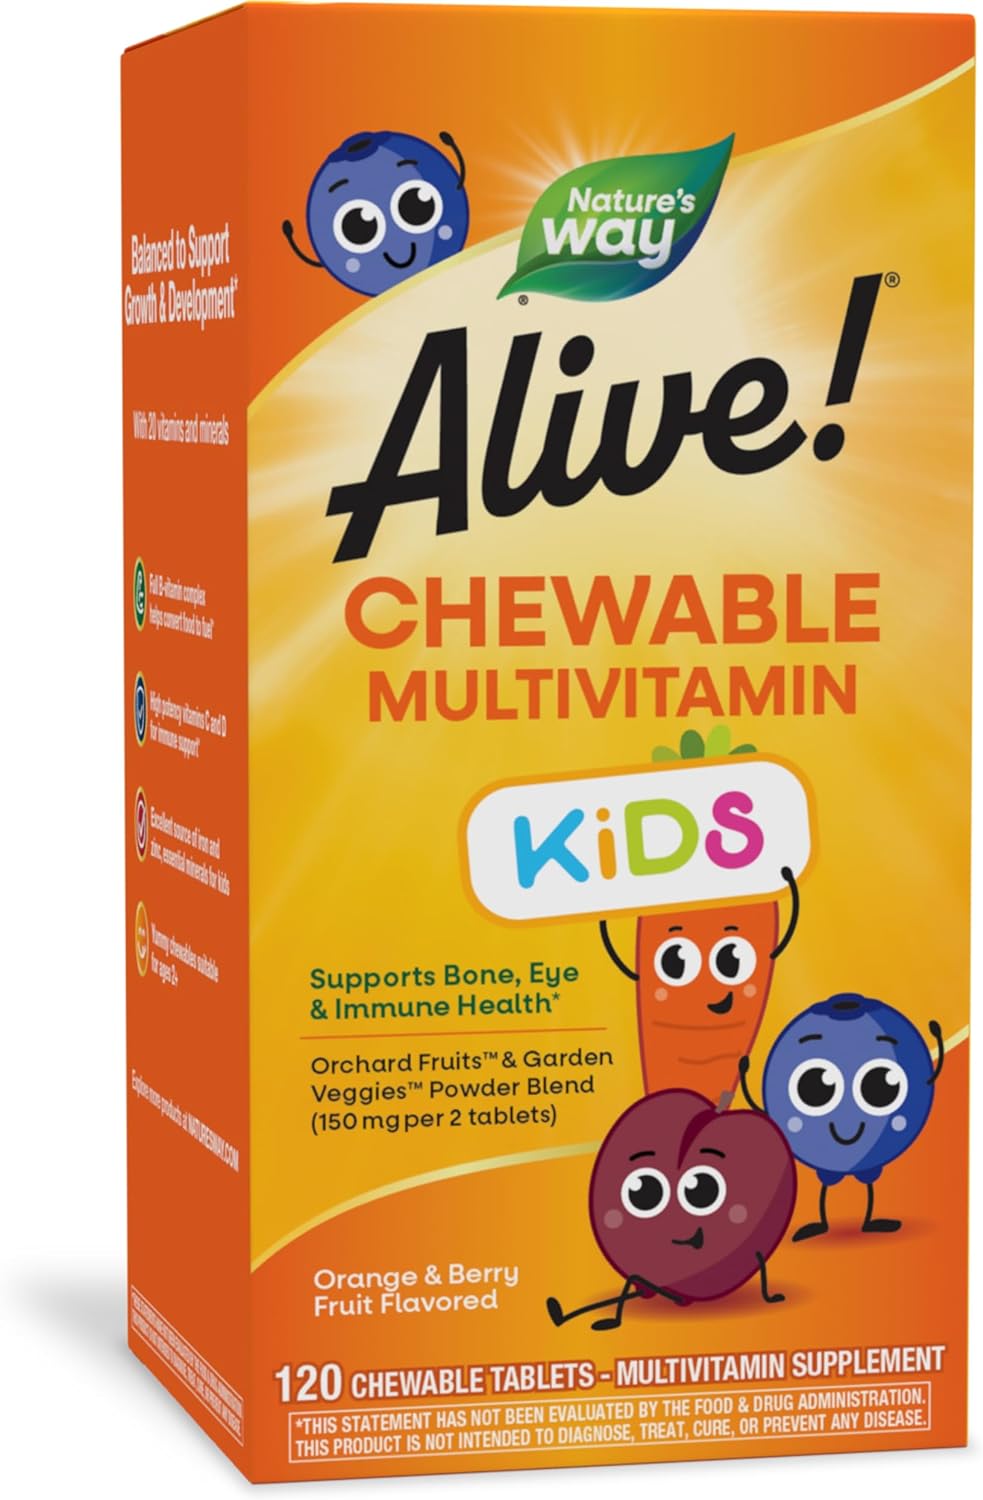 Nature's Way Alive! Multi-Vitamina para Crianças 120 Tablets mastigáveis